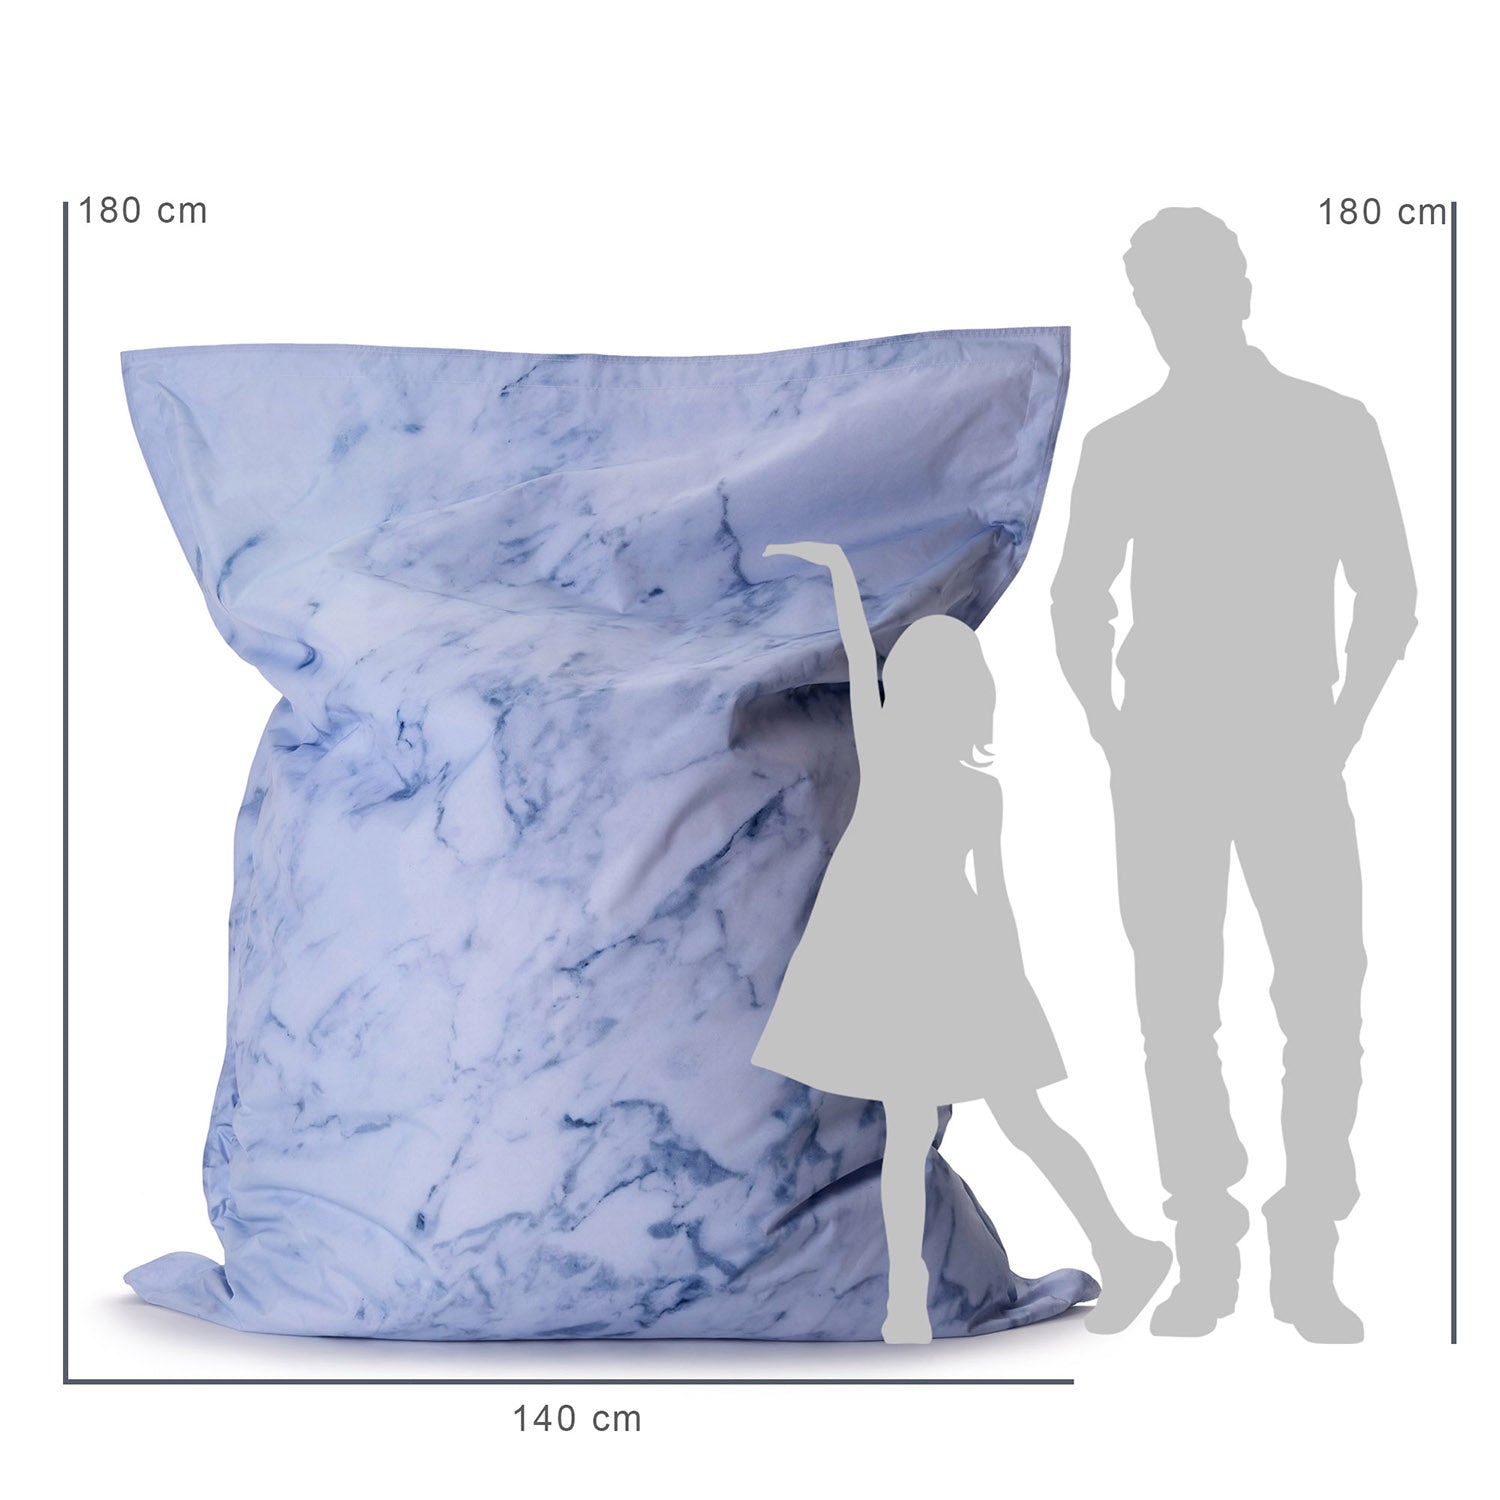 XXL Sitzsack im Marmor Design 380L - 140 x 180 cm - Indoor Outdoor - Limited Edition